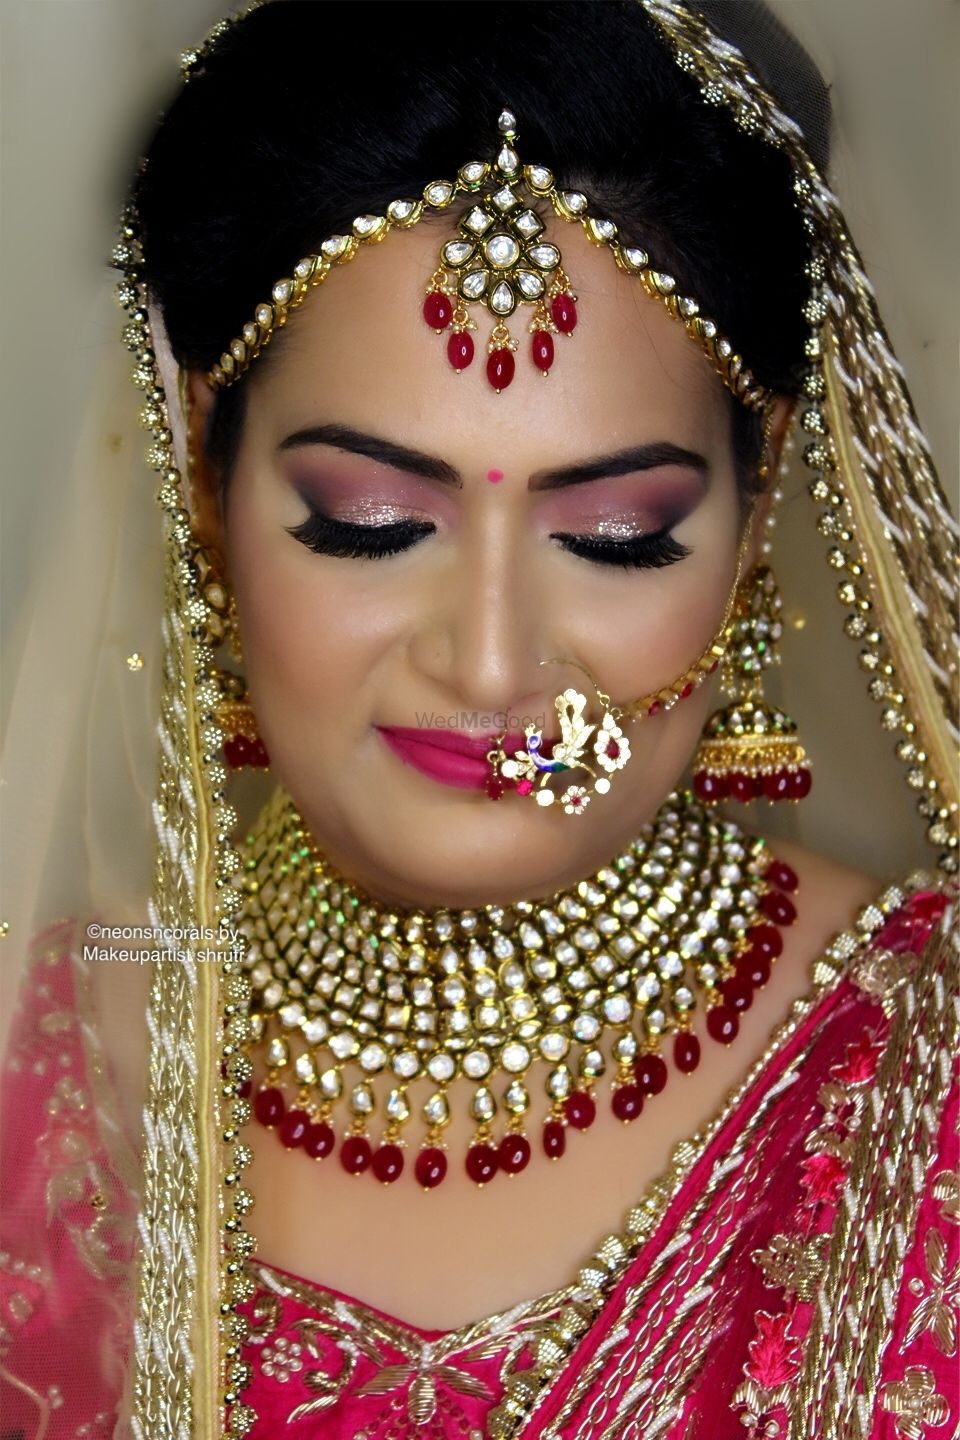 Photo By NeonsNcorals by Makeup Artist Shruti - Bridal Makeup